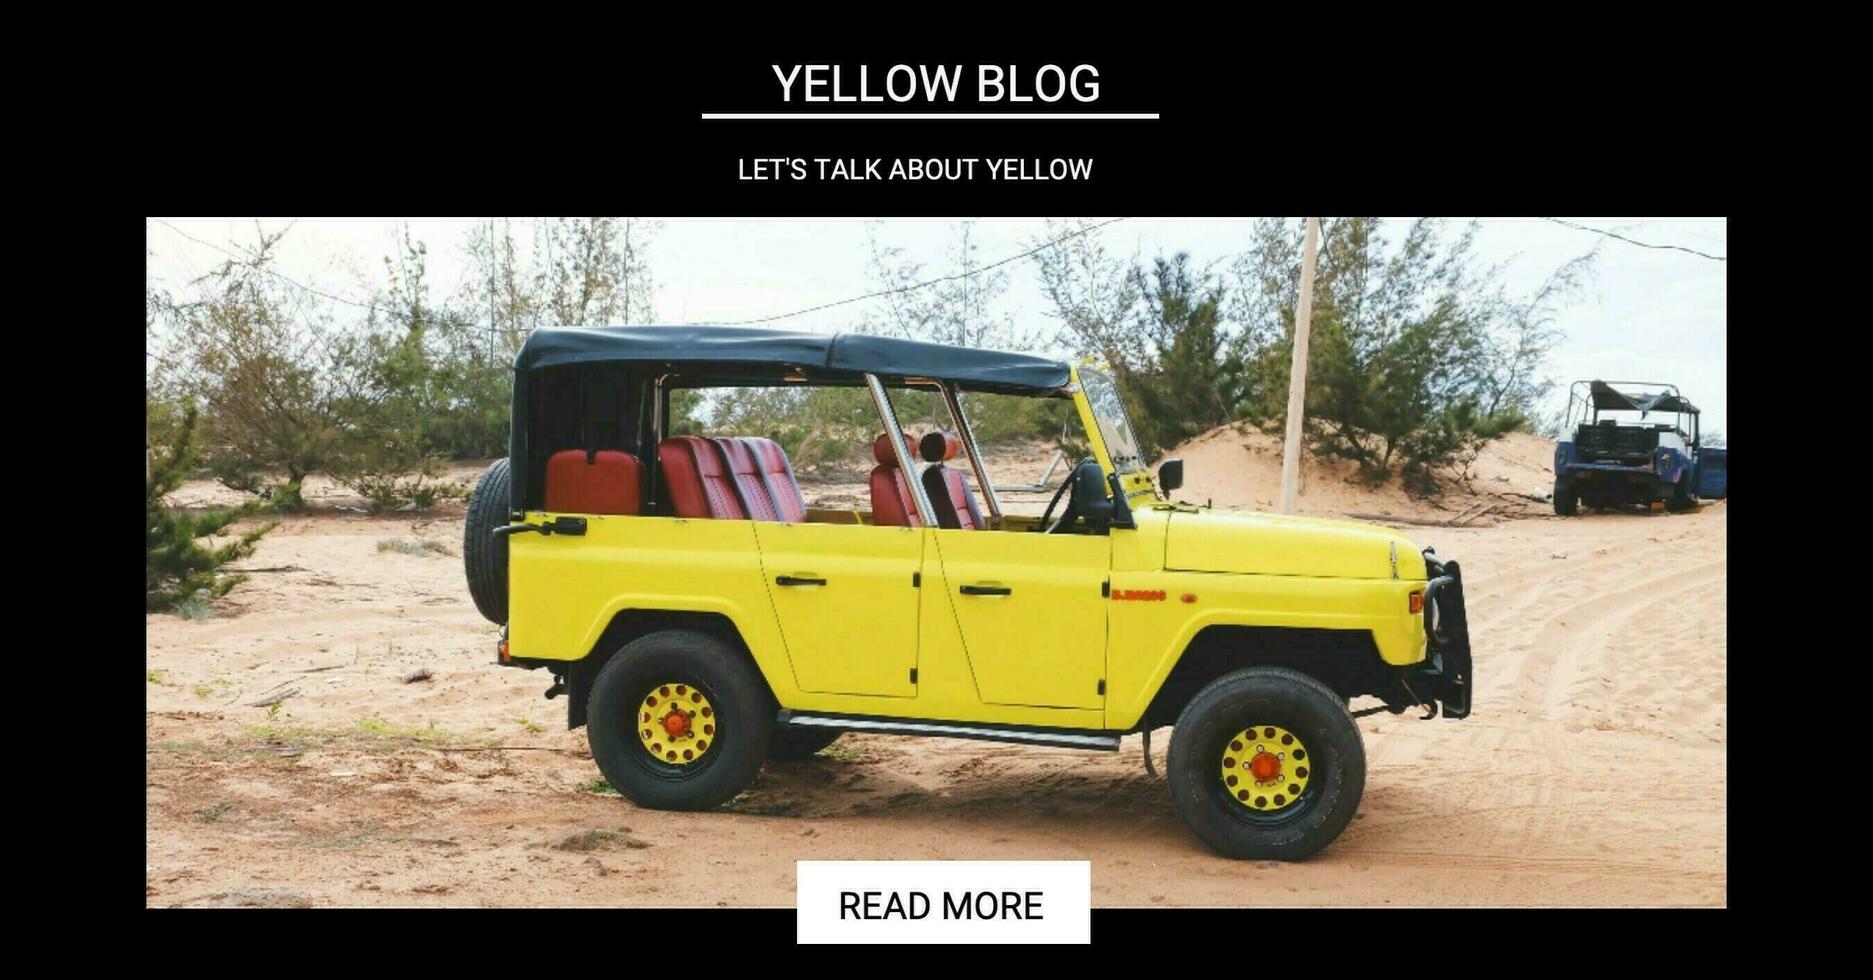 Yellow Blog template